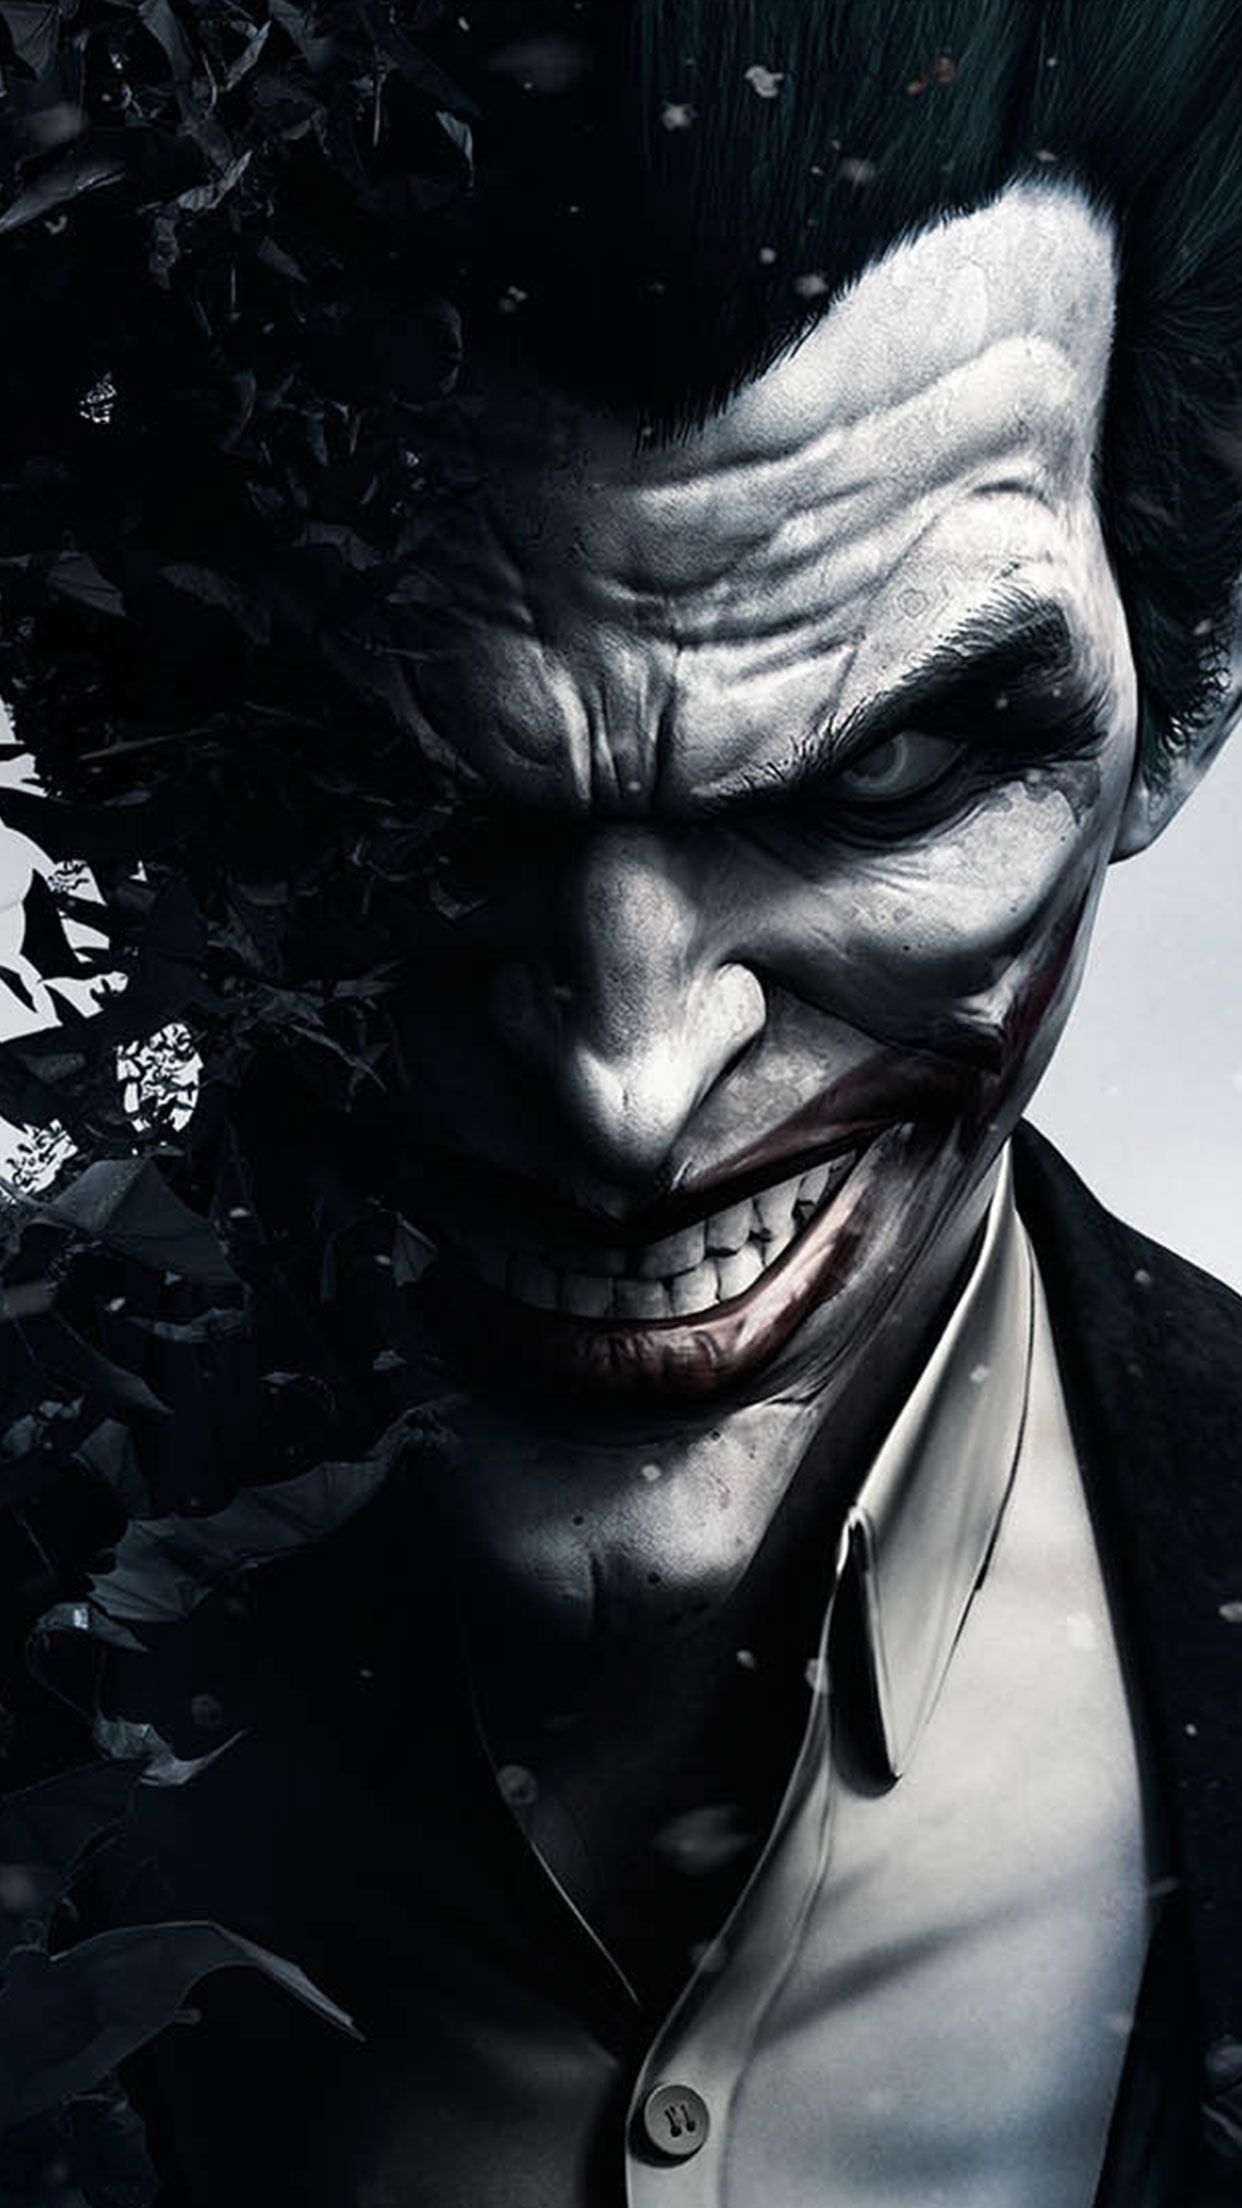 Batman Joker Game Wallpaper iPhone Android